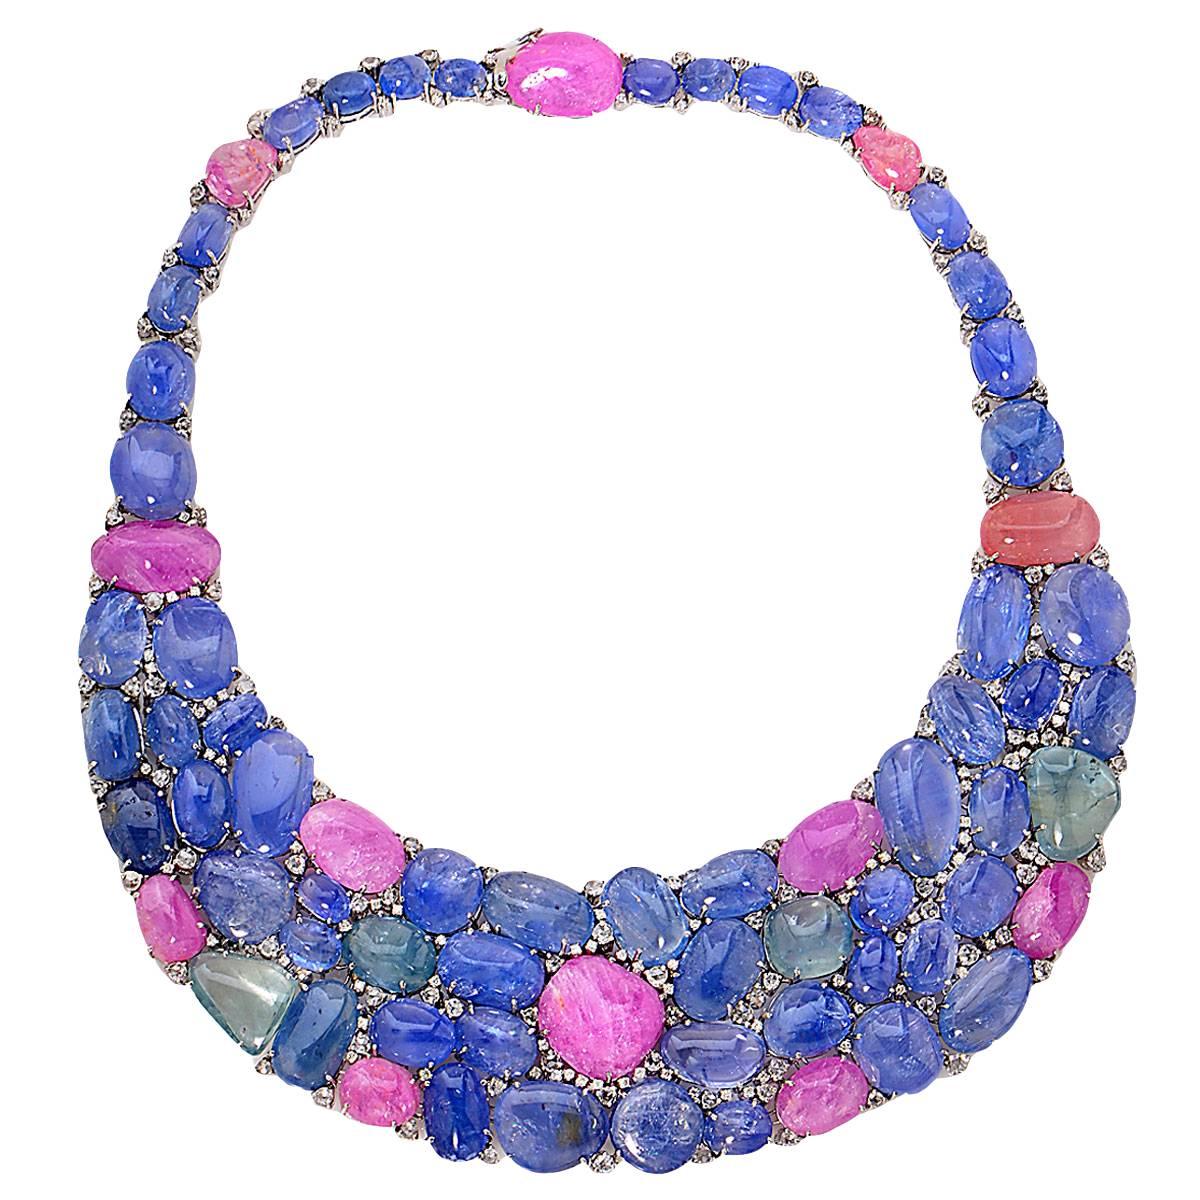 775 Carat Sapphire and Diamond Necklace